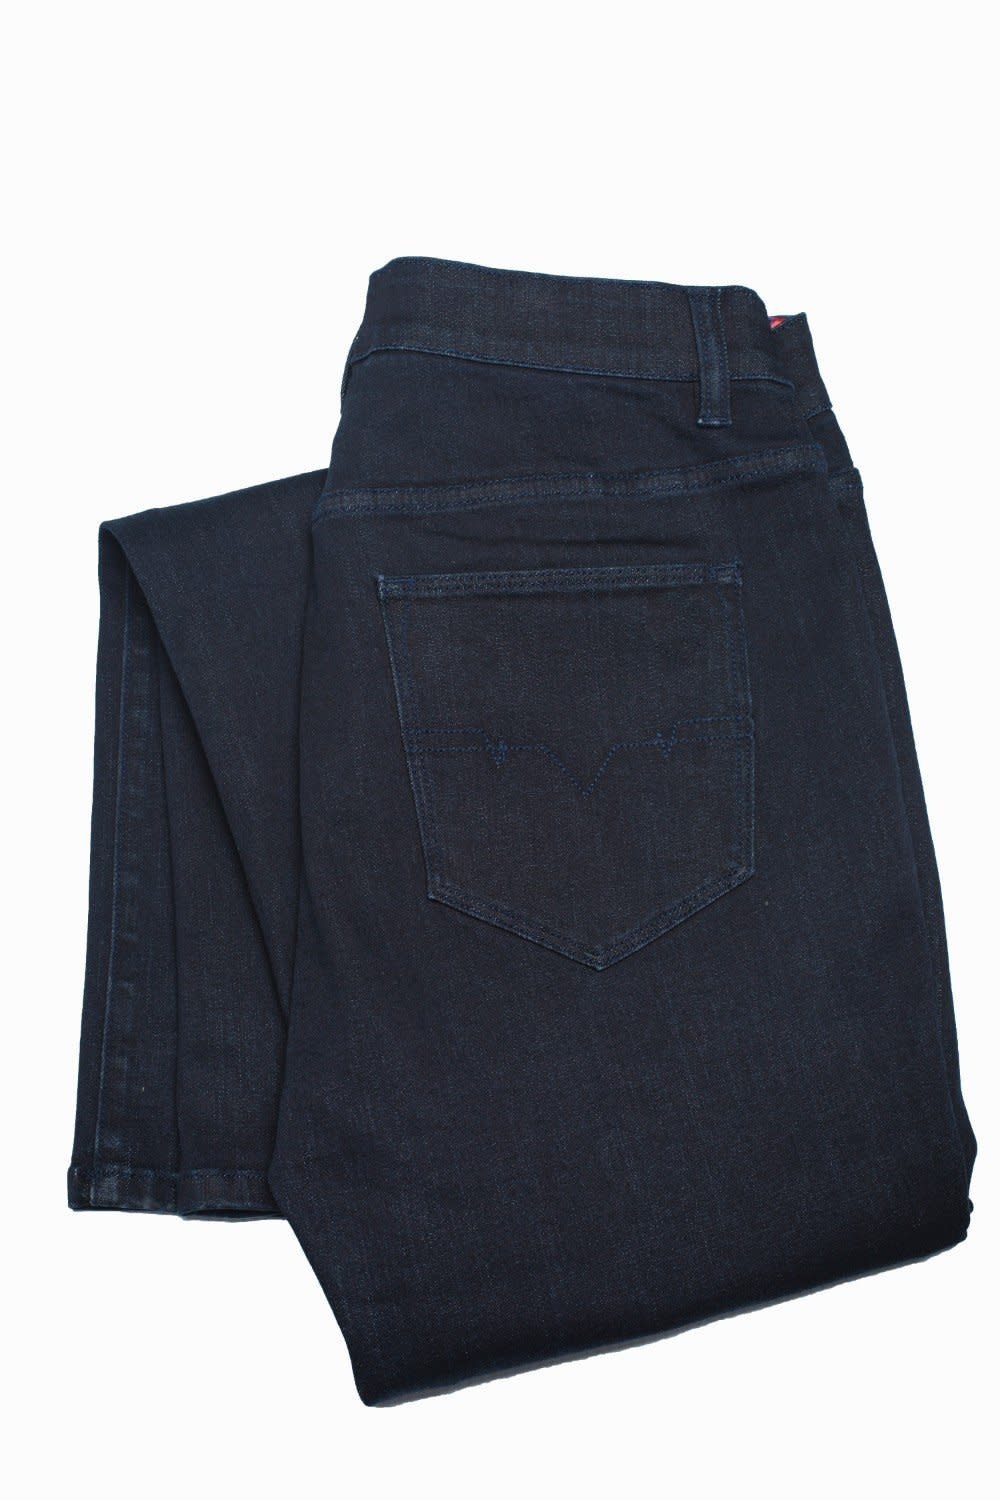 Dean T - Amsterdam Jeans